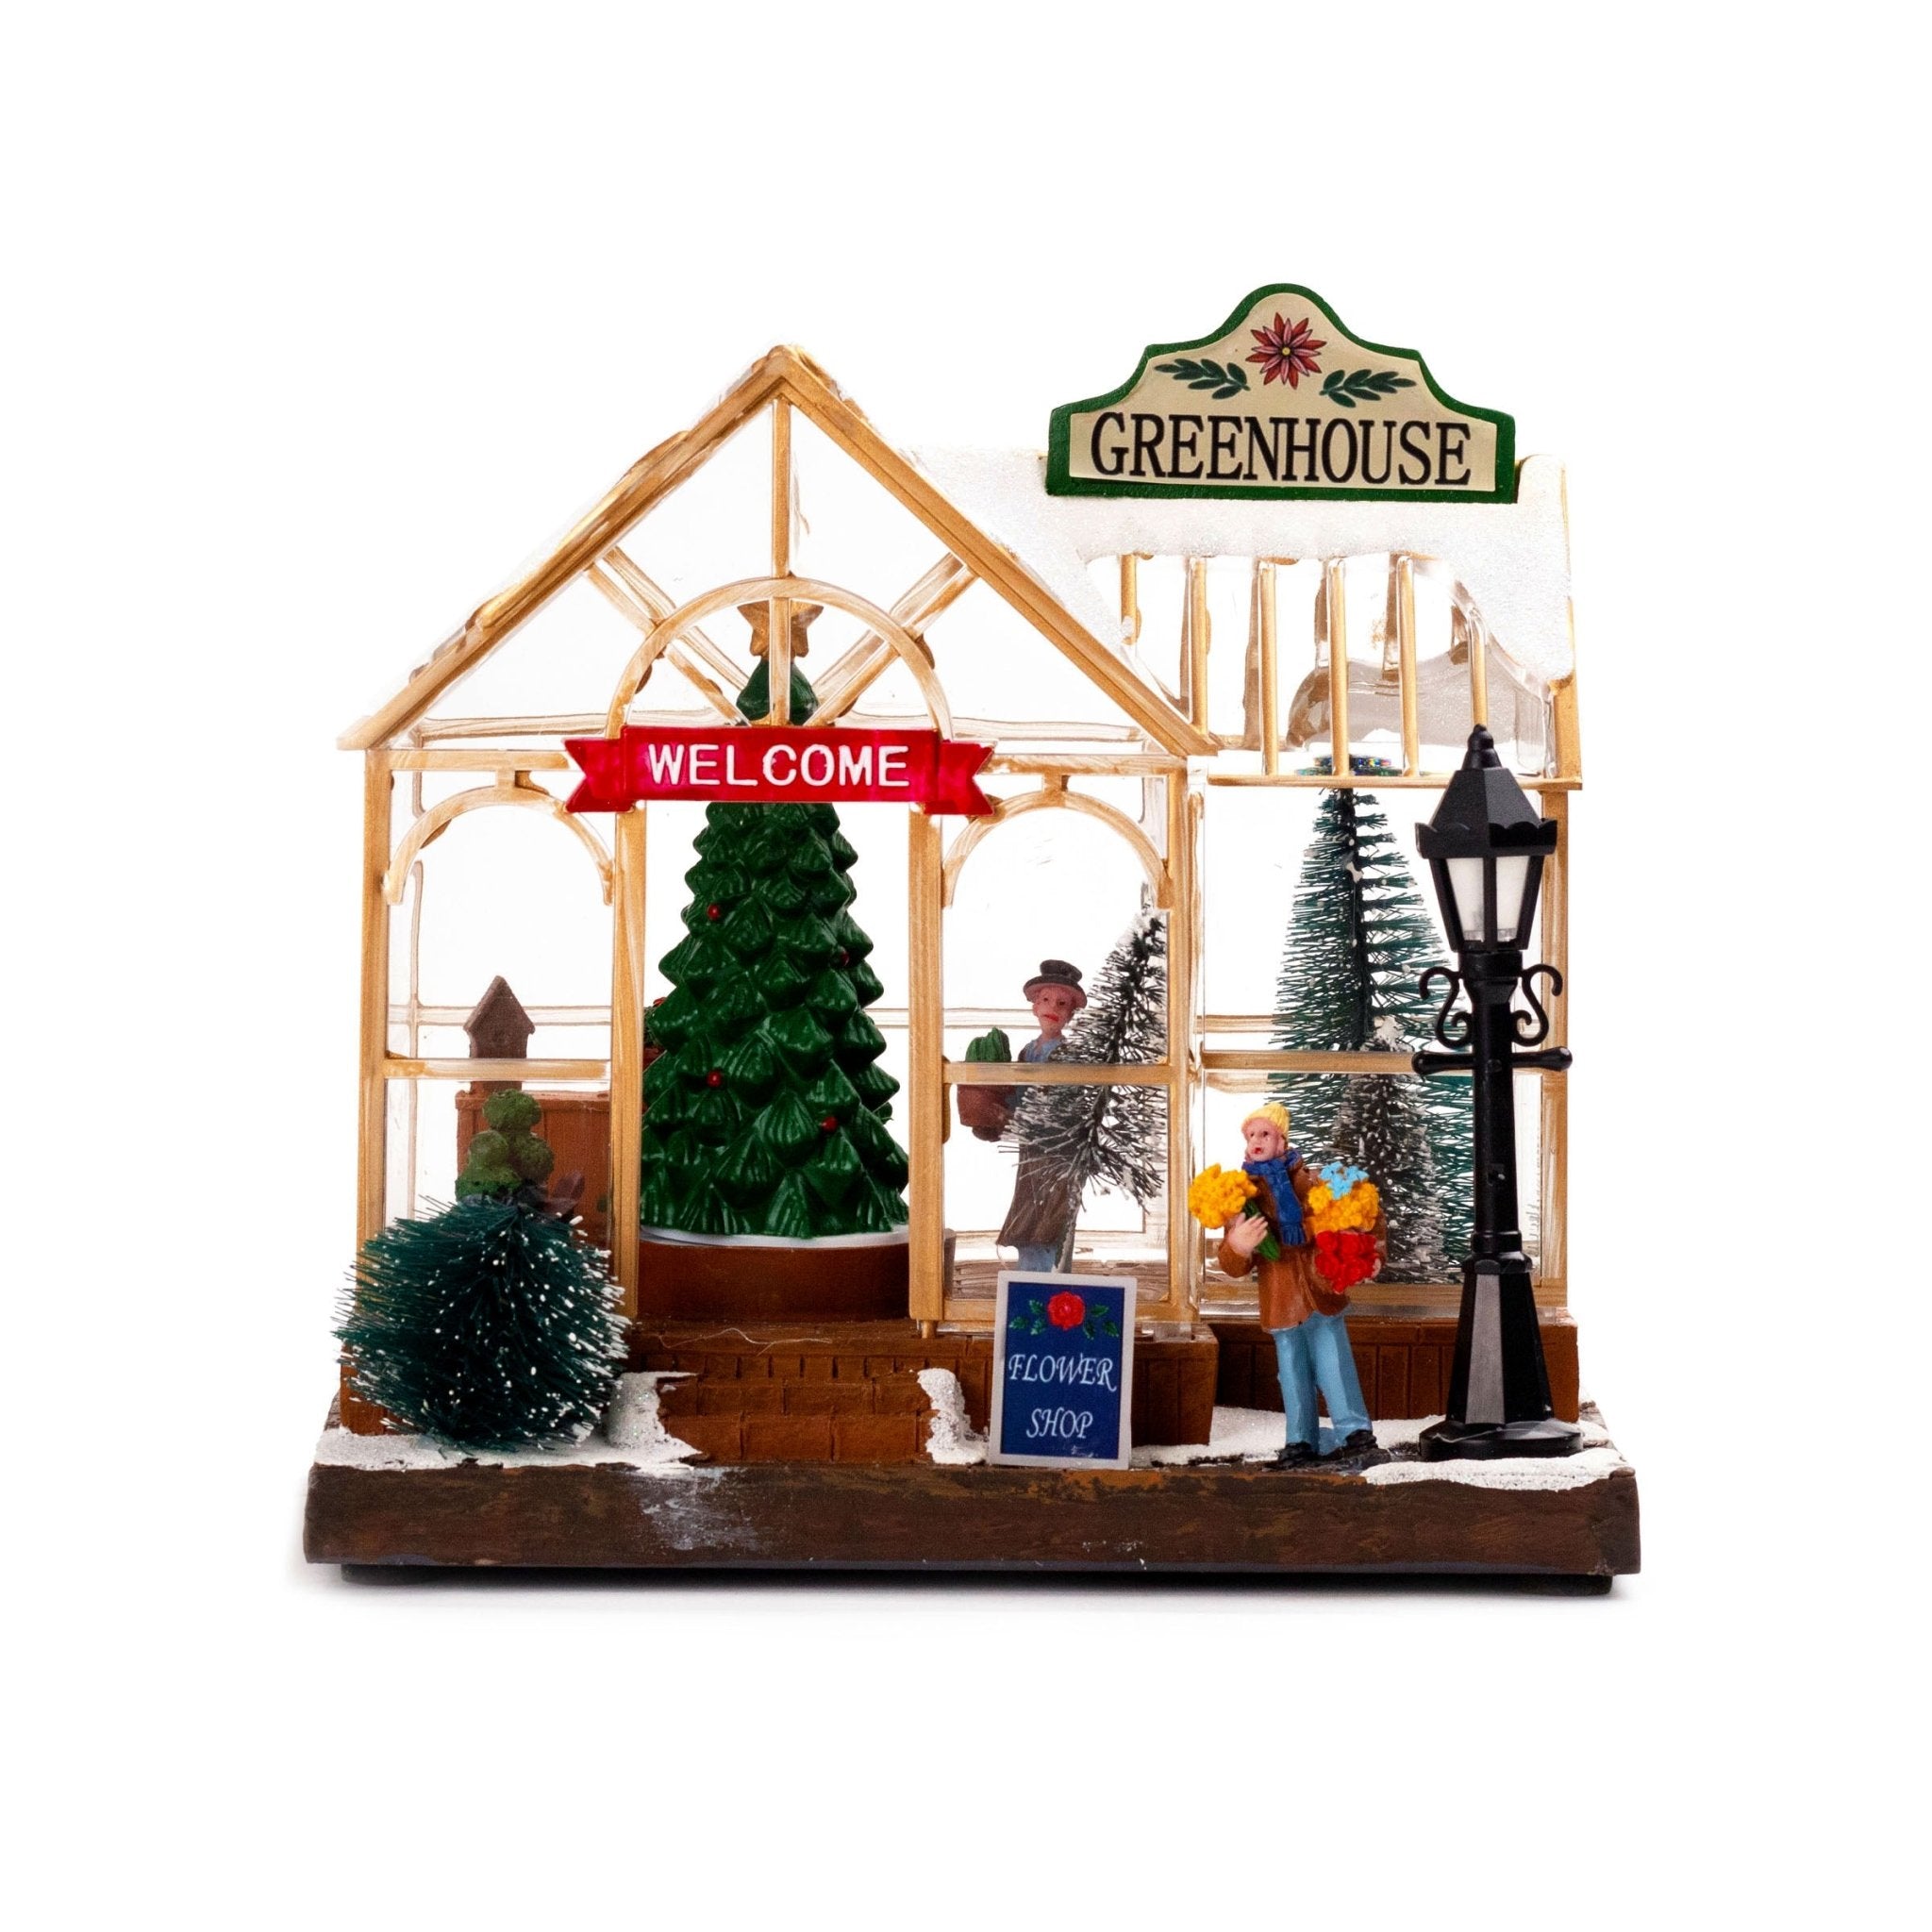 Musical Christmas Tree Shop with Rotating Christmas Tree CVL005 - MODA FLORA Santa's Workshop